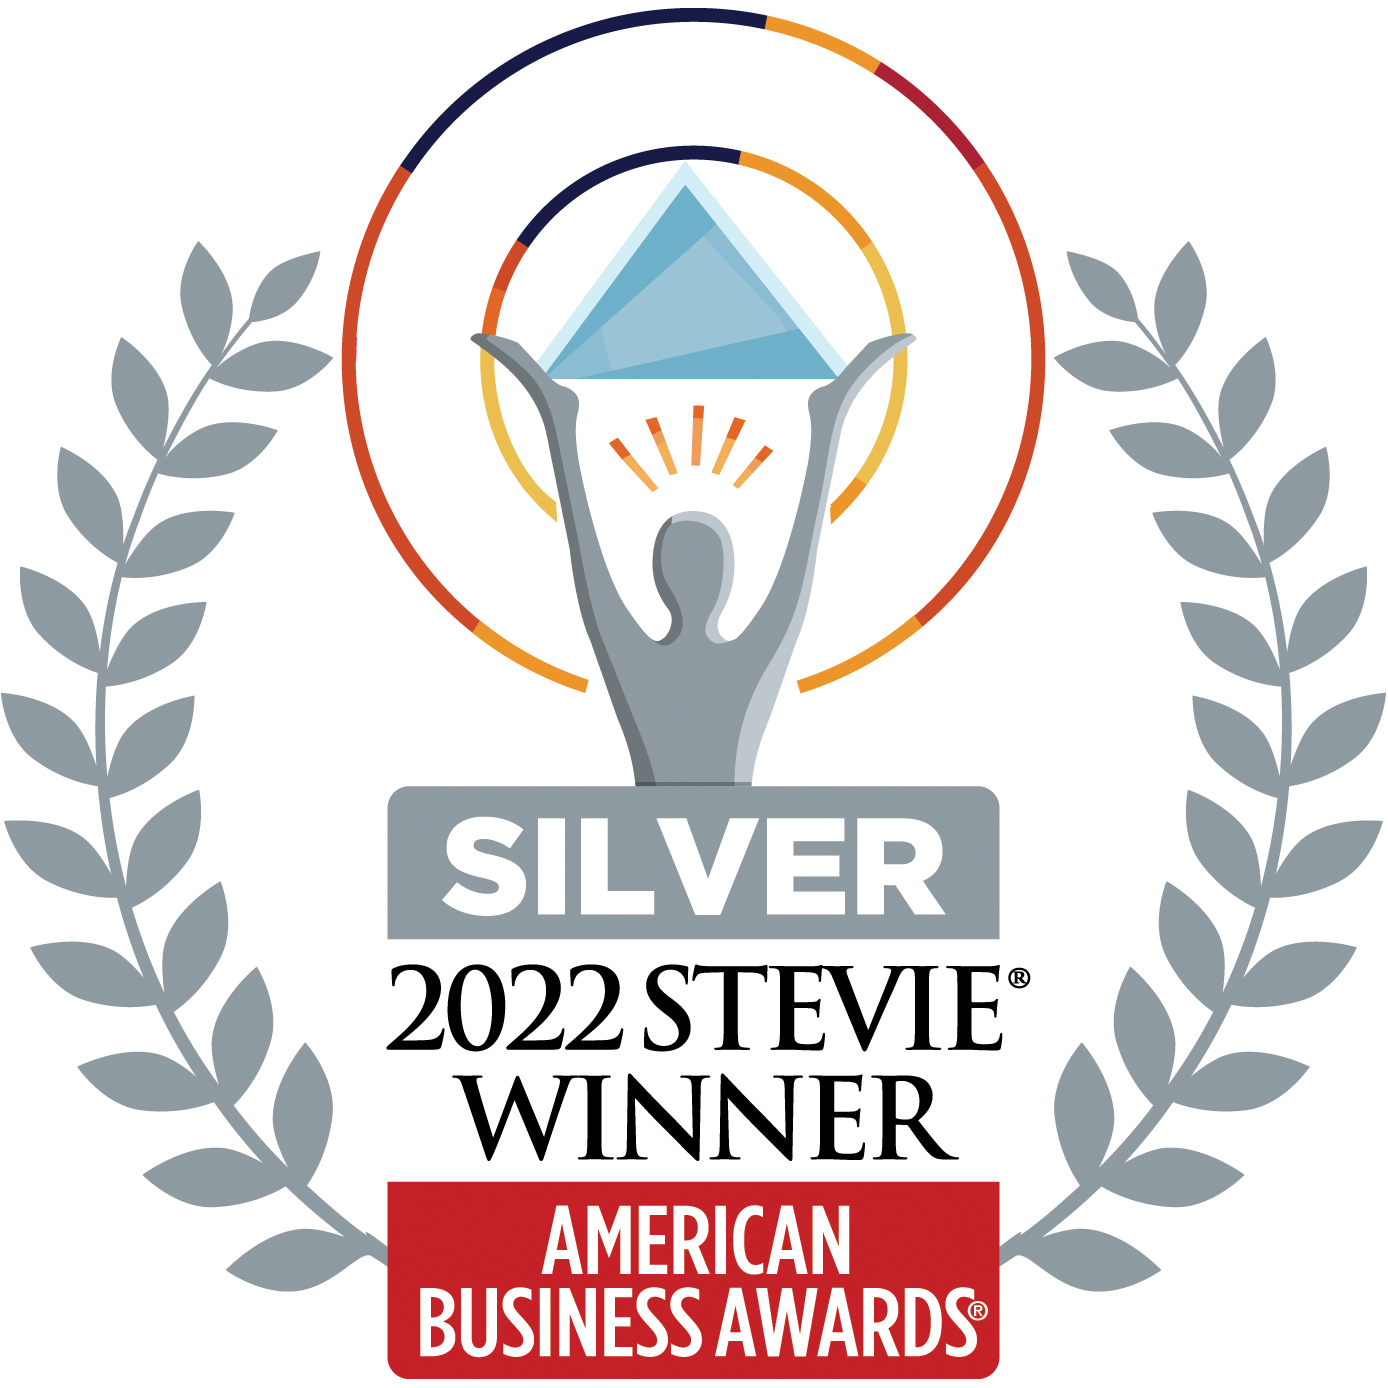 Beam Global awarded the silver stevie award in 2022